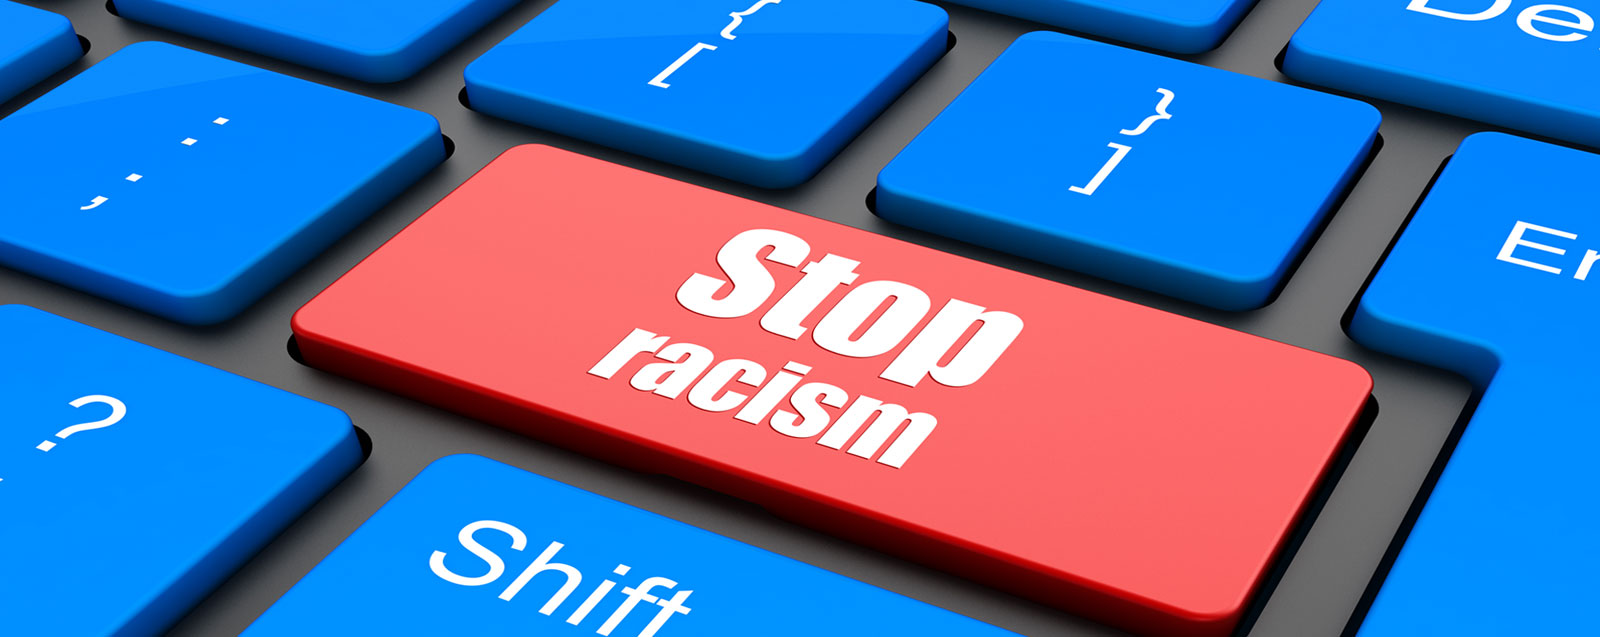 stop racism keyboard key